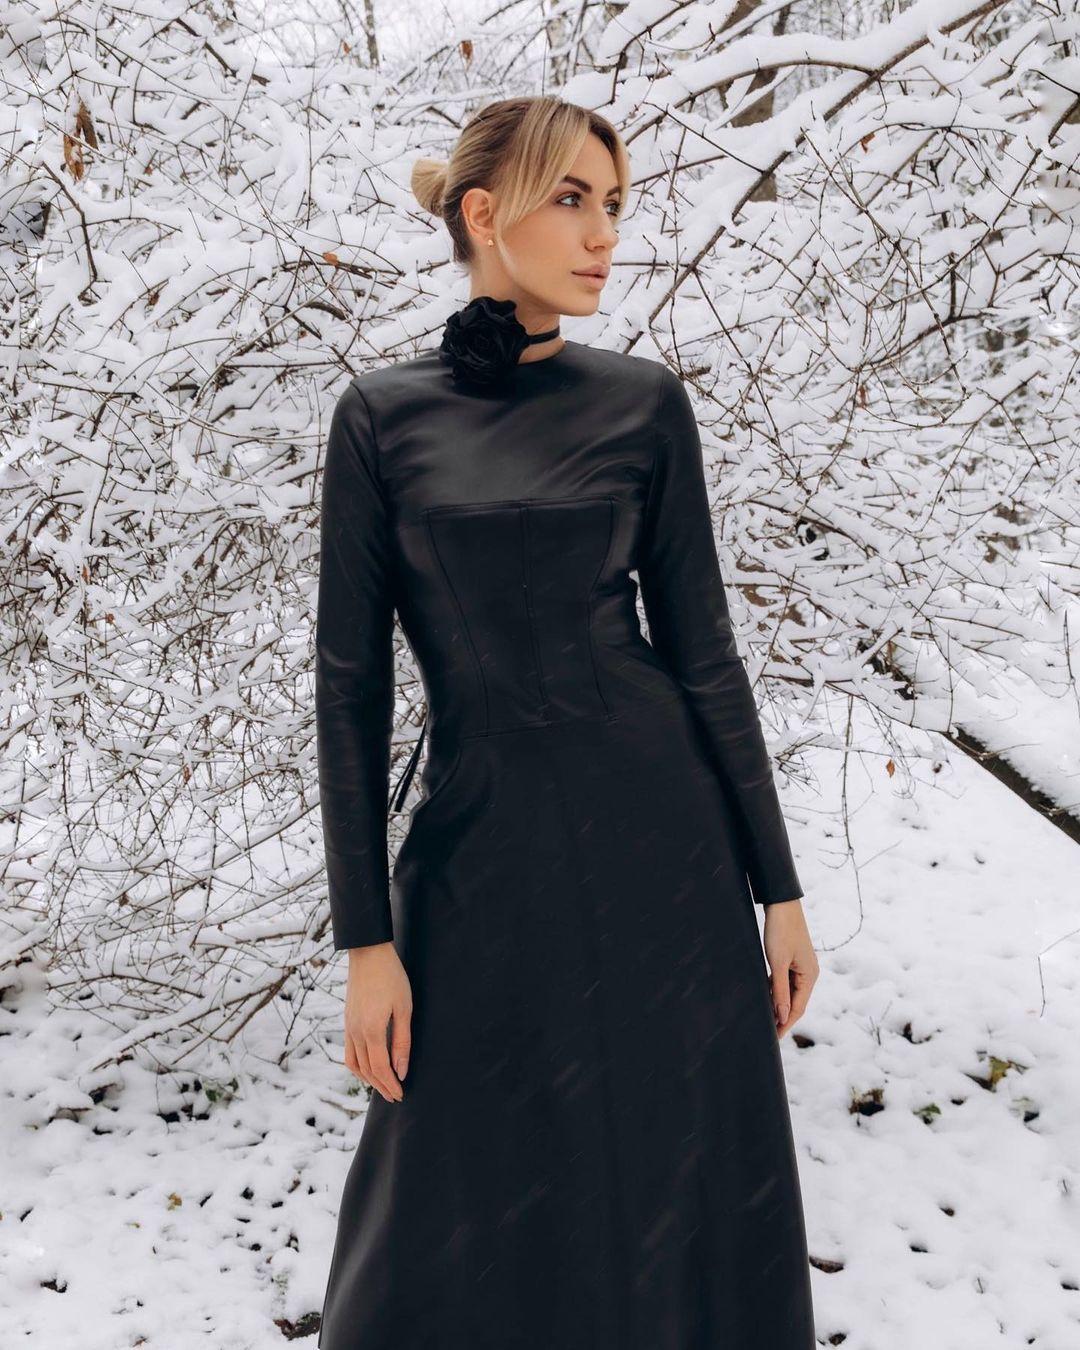 Lesya Nikityuk appeared in a dress from a Ukrainian brand / instagram.com/lesia_nikituk